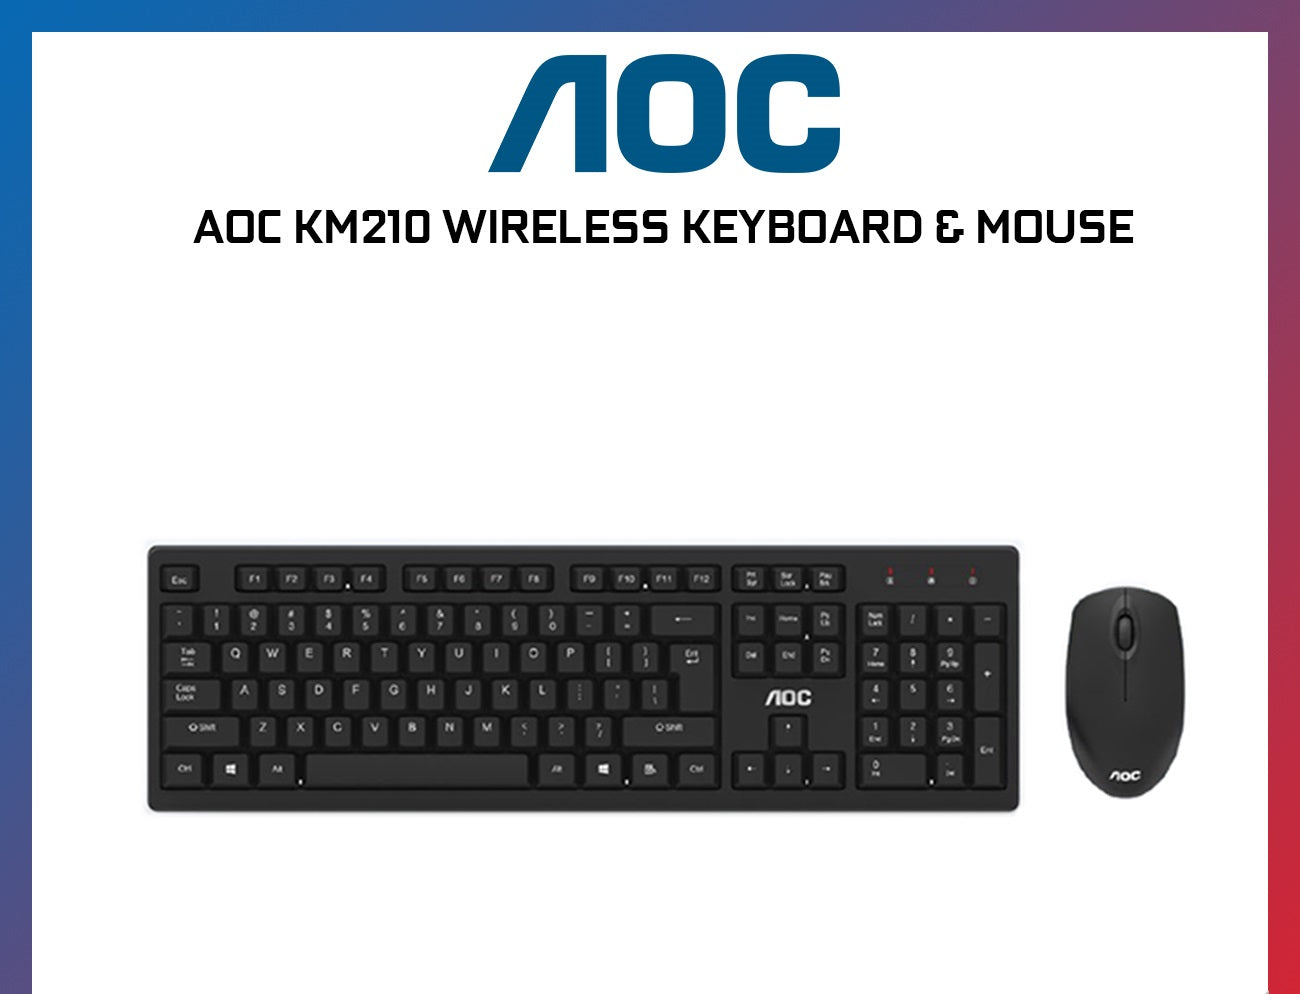 AOC Wireless Keyboard and Mouse